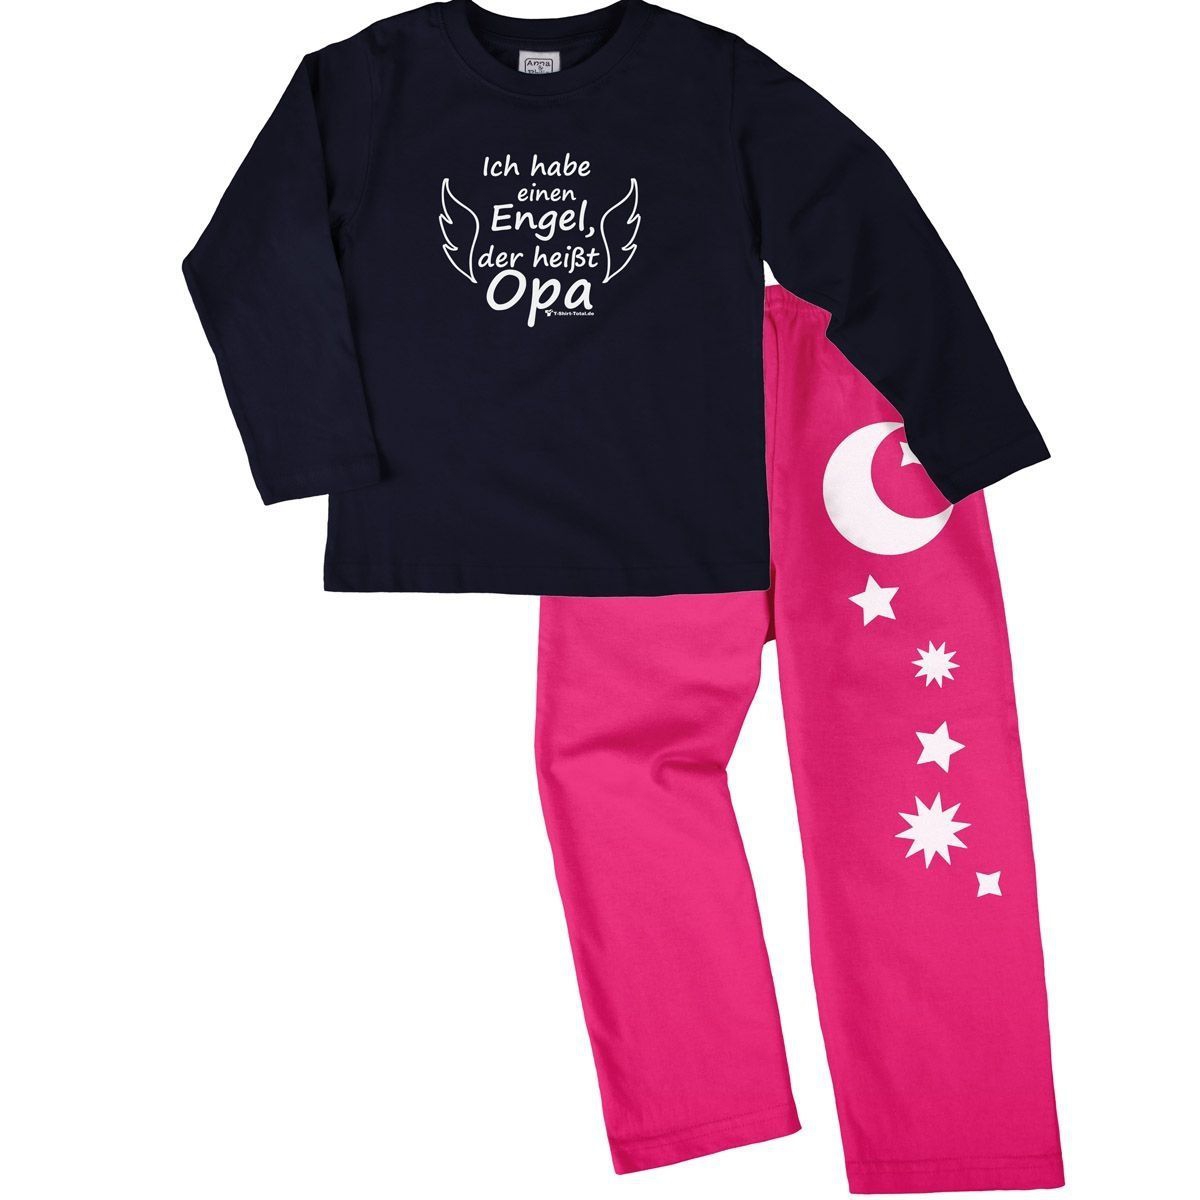 Engel Opa Pyjama Set navy / pink 110 / 116